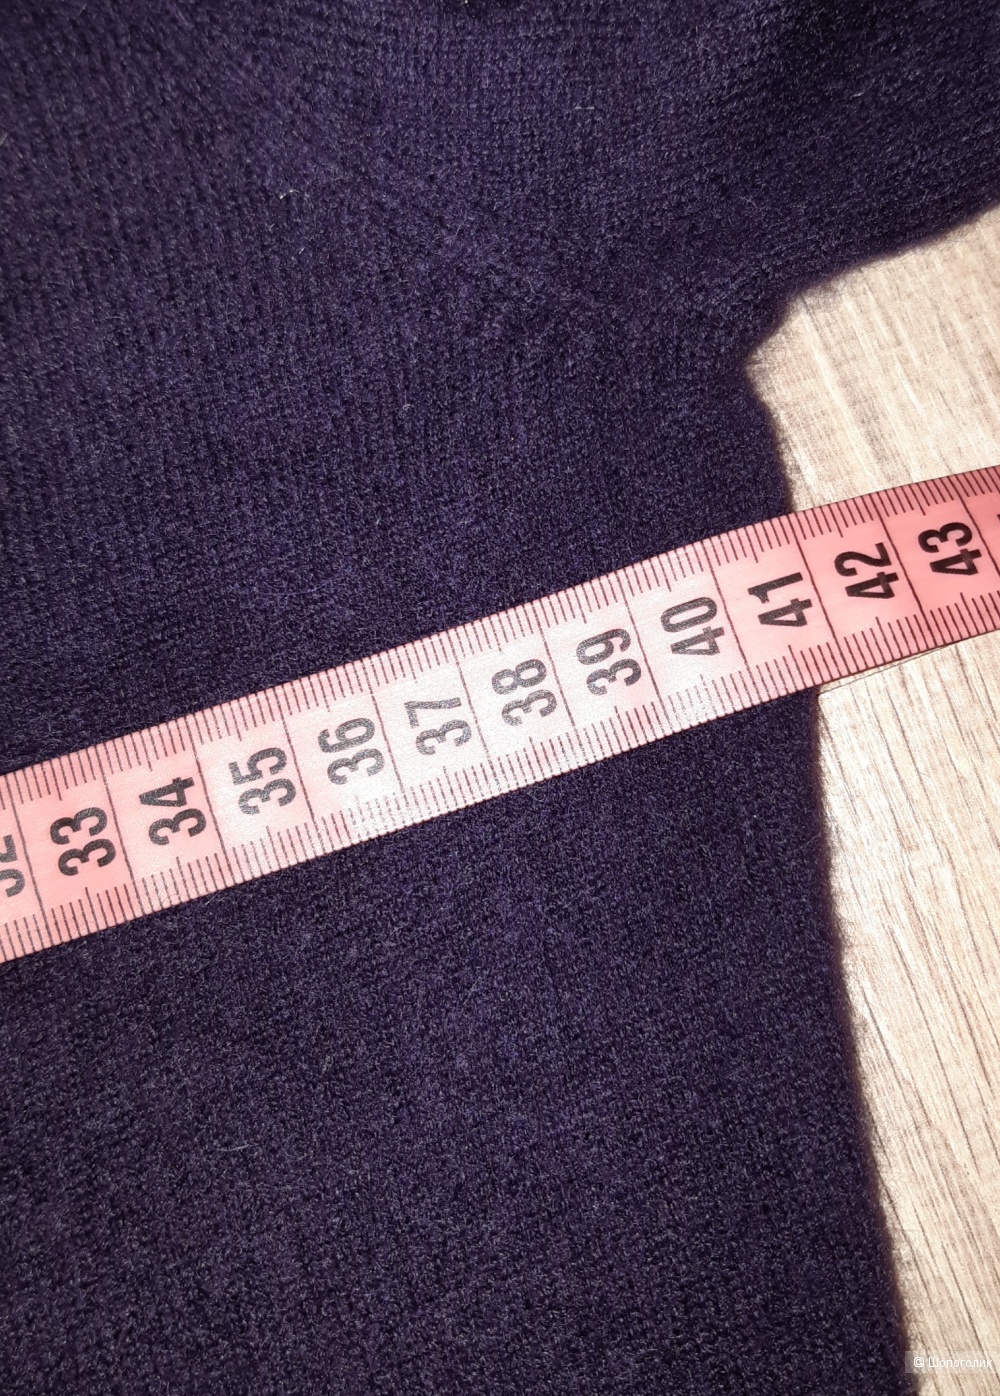 Кашемировый пуловер repeat cashmere, размер s/m